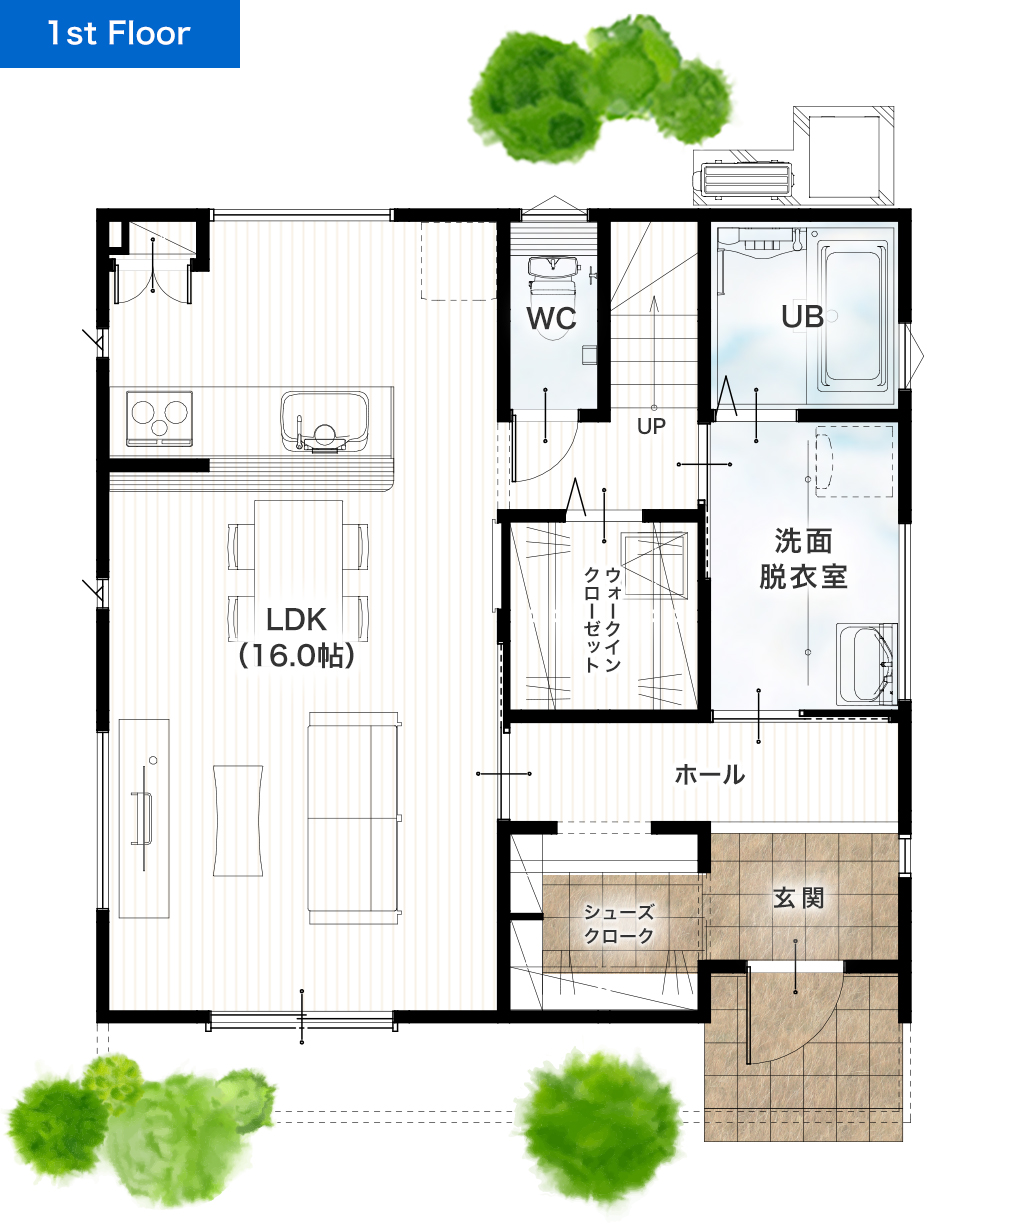 熊本市北区麻生田5丁目 31坪 4SLDK 建売・一戸建ての新築物件 1階間取り図